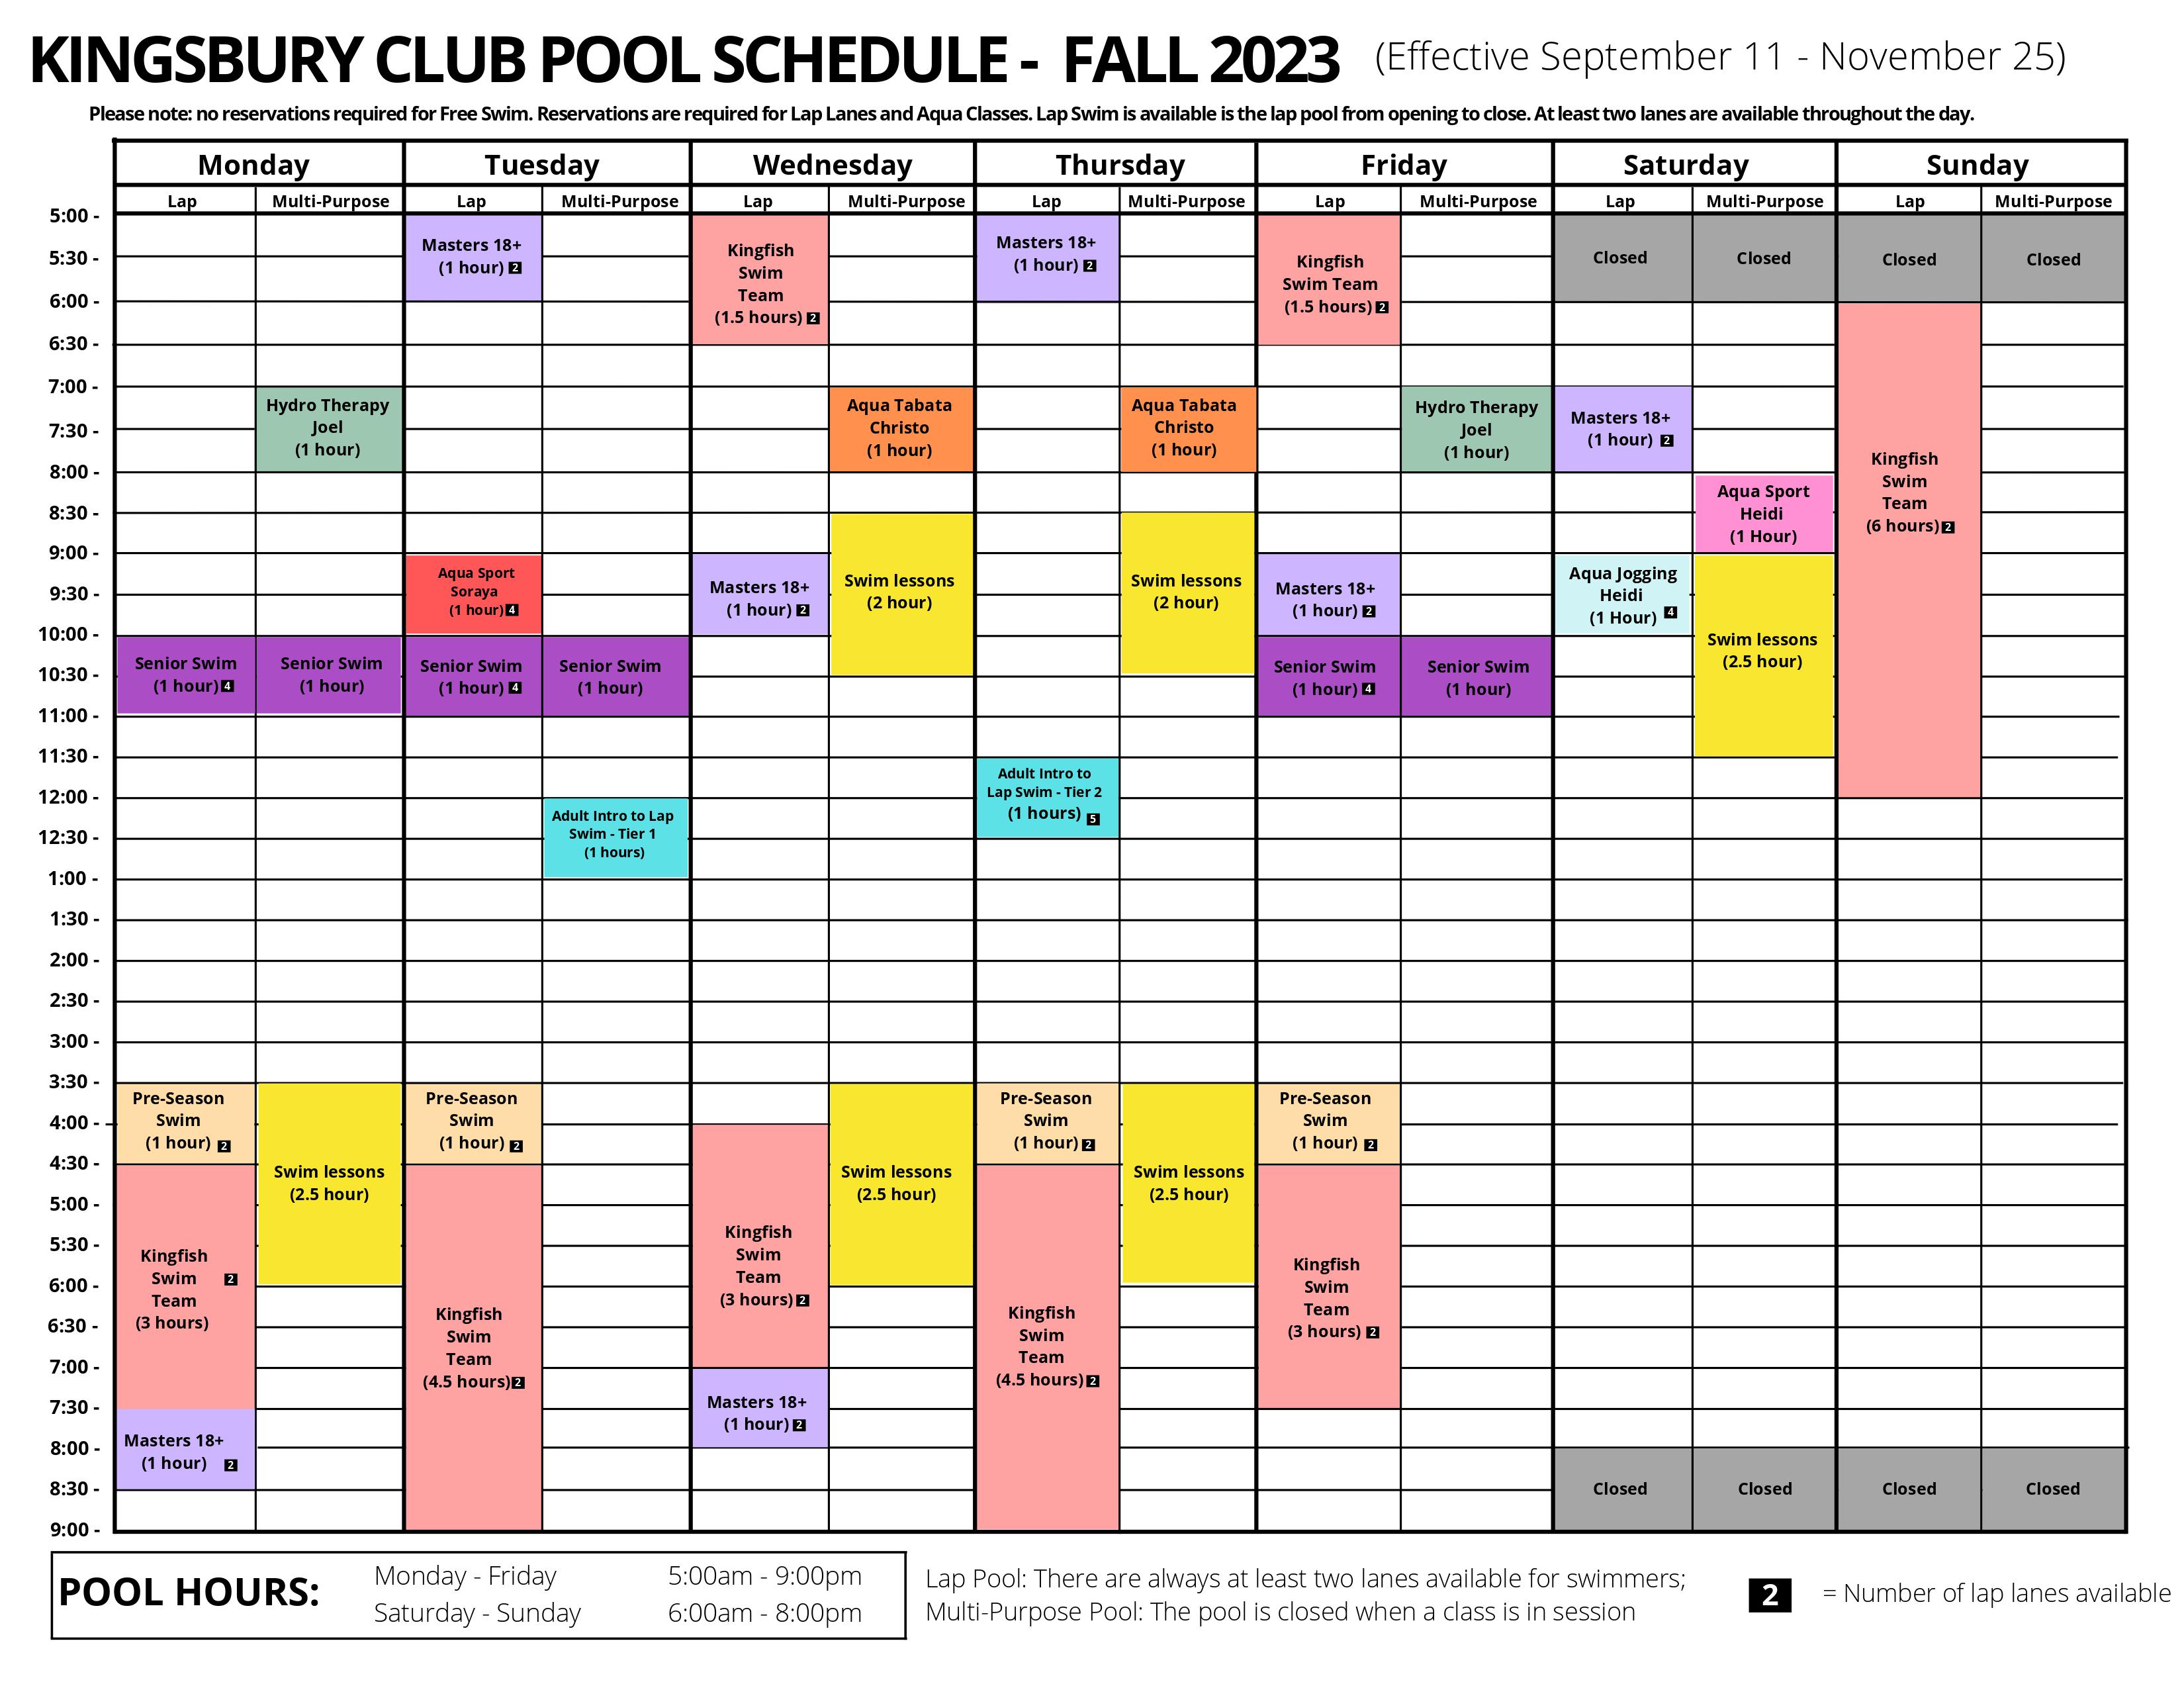 Pool Schedule Spring 2023